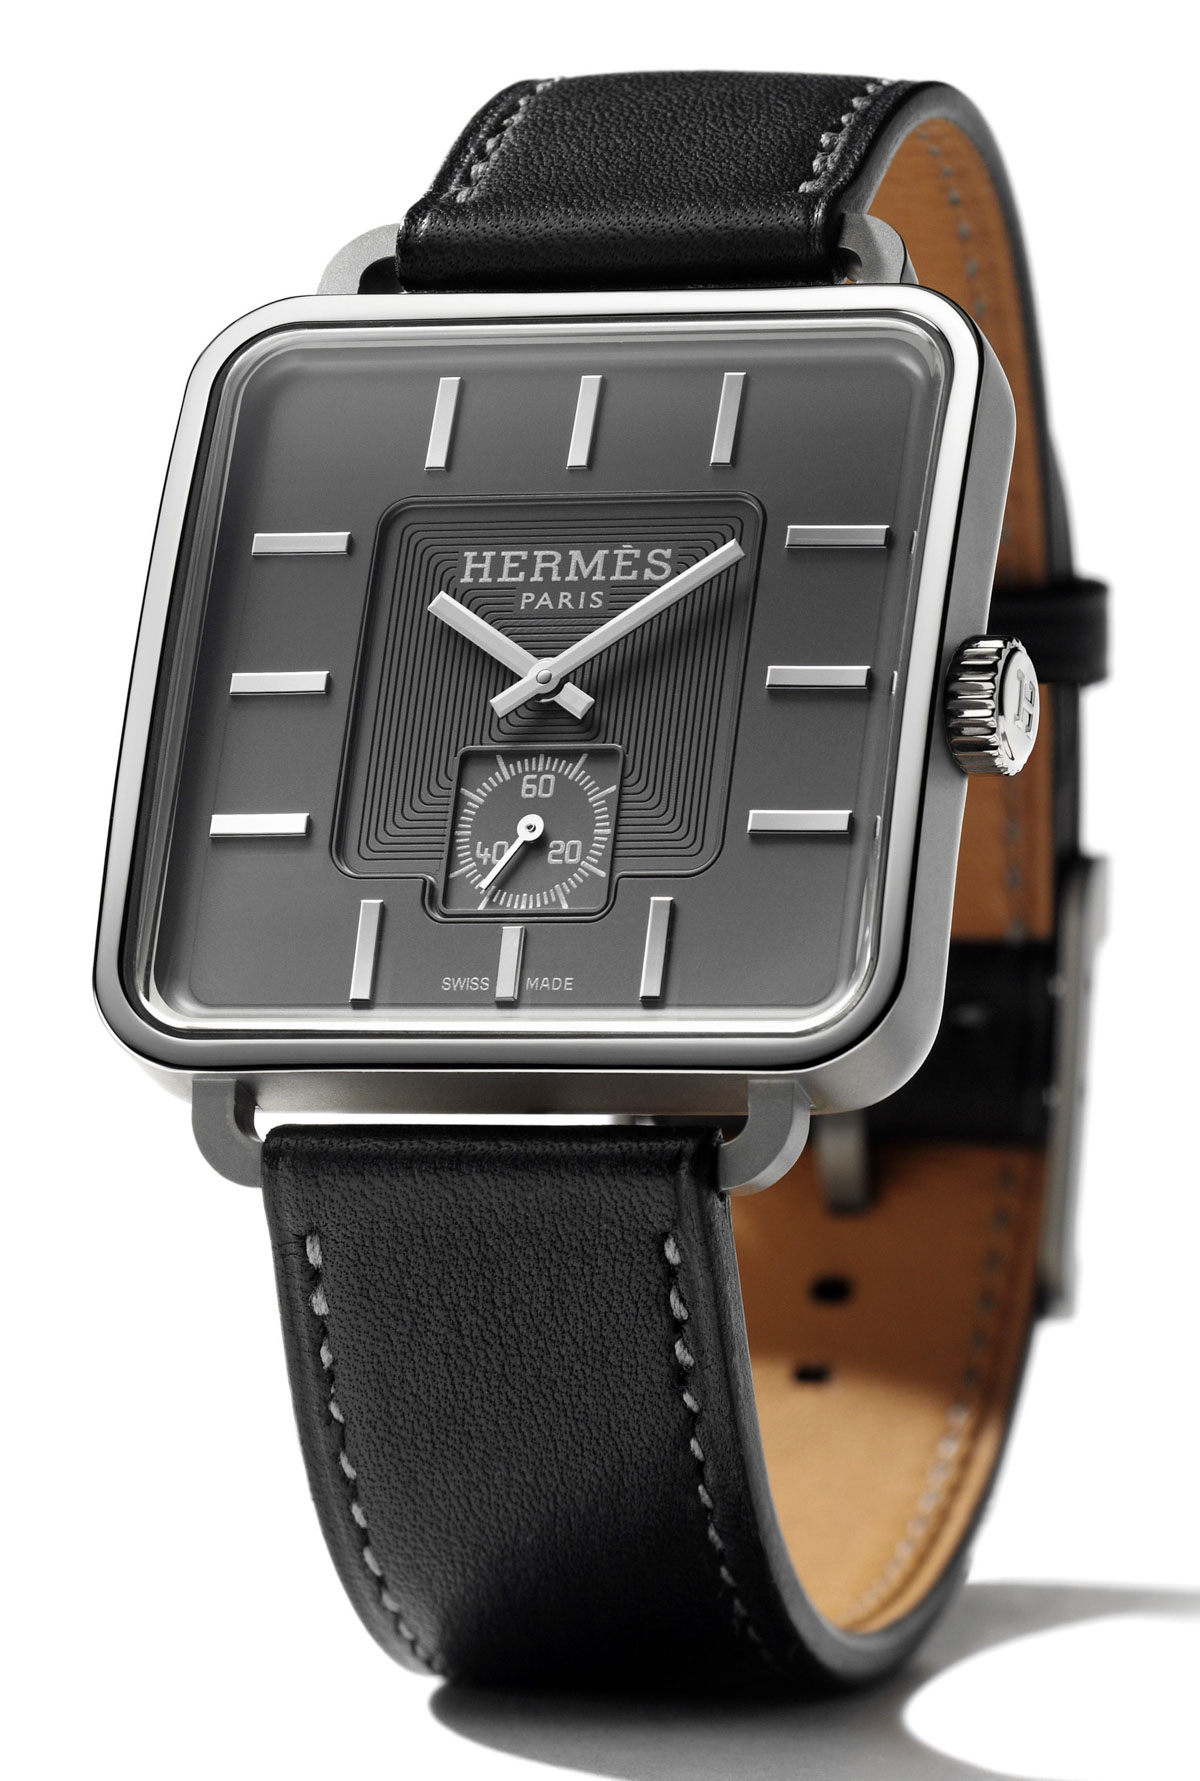 hermes h watch price